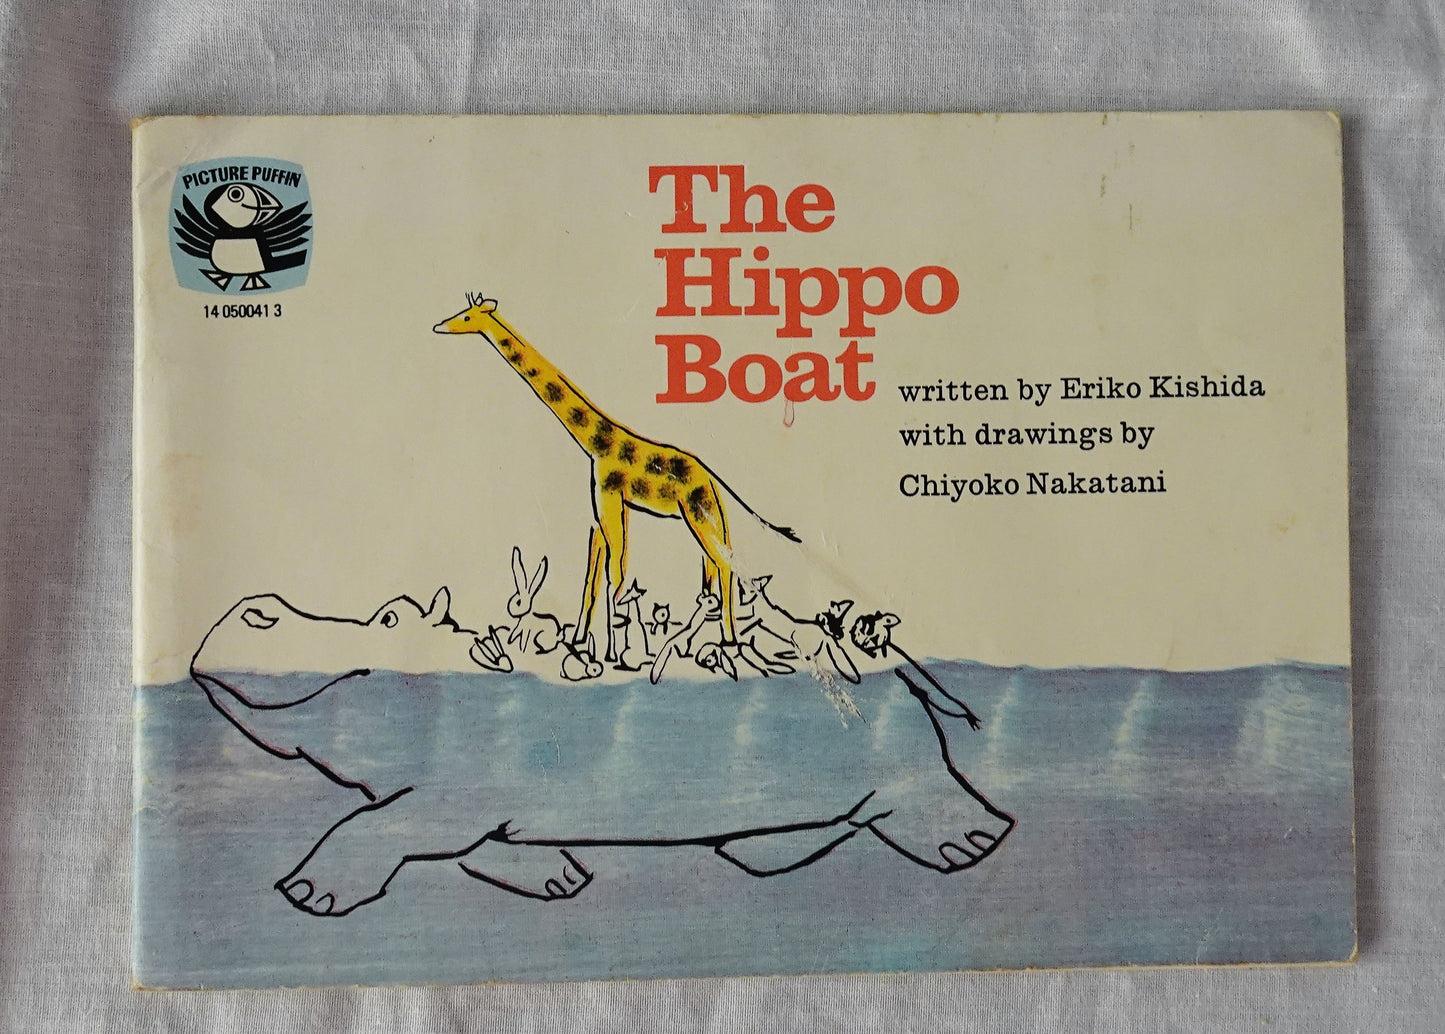 The Hippo Boat  by Eriko Kishida  drawings by Chiyoko Nakatani